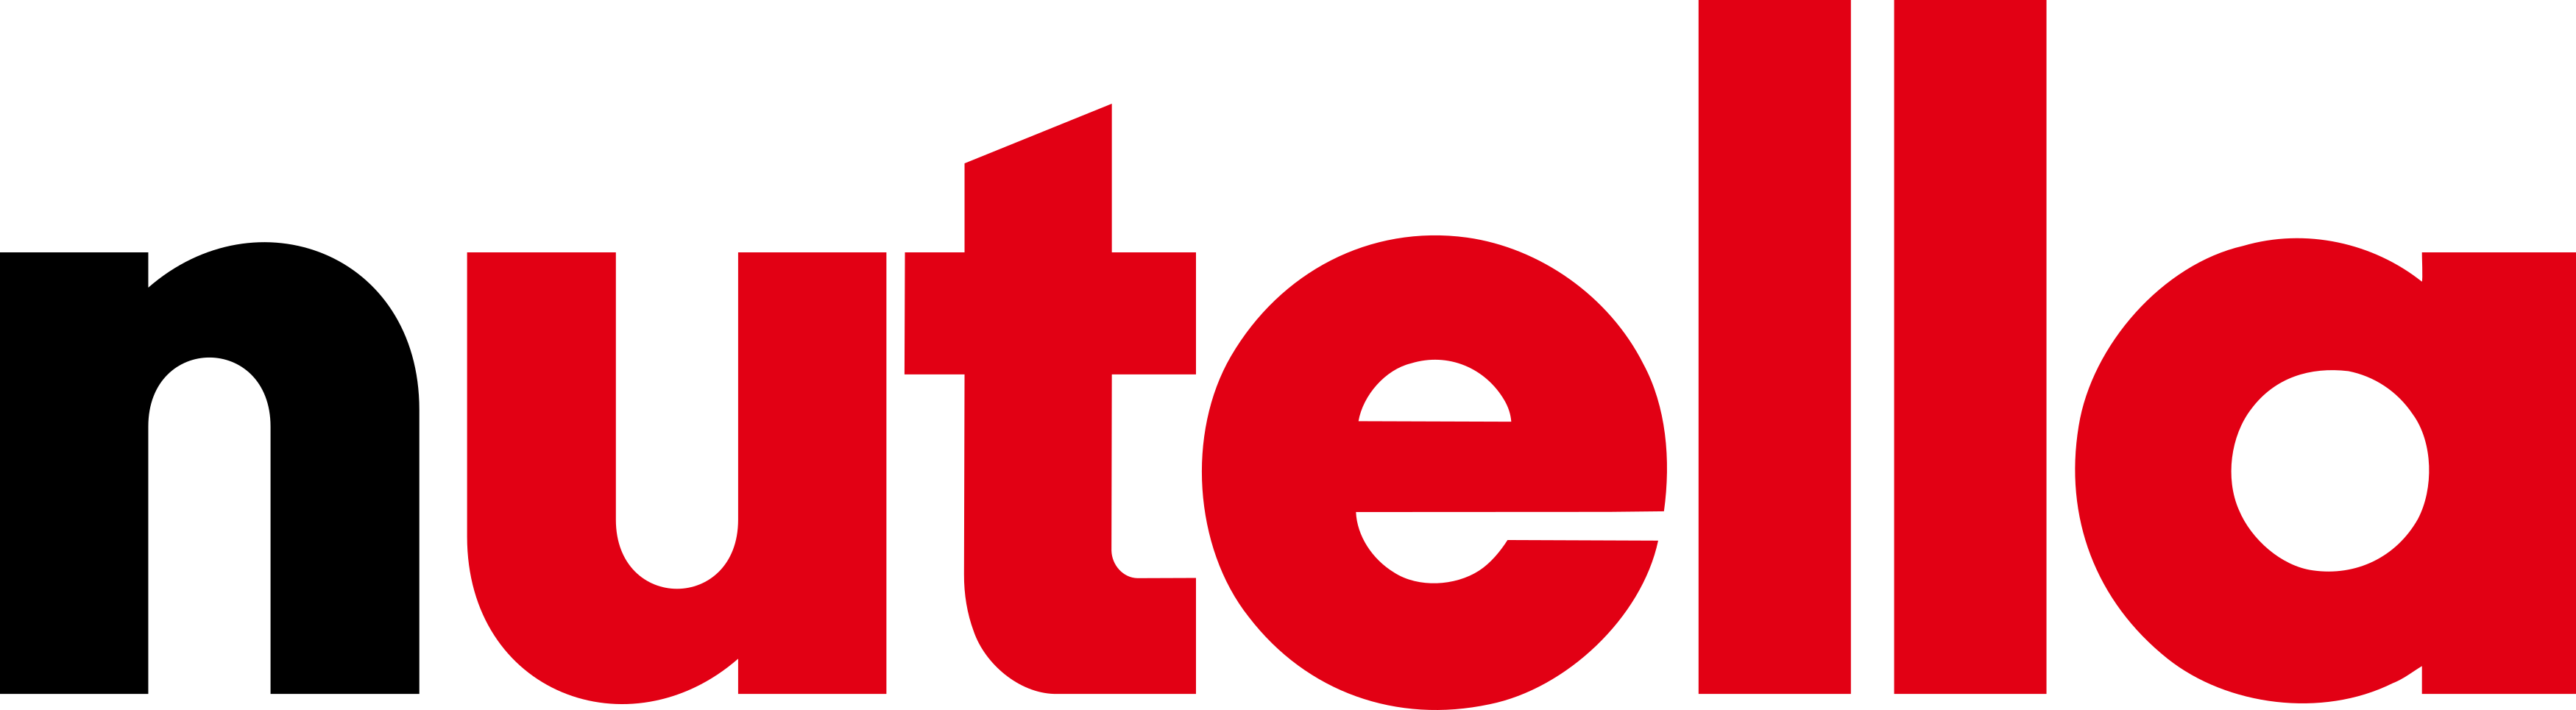 Nutella Logo.